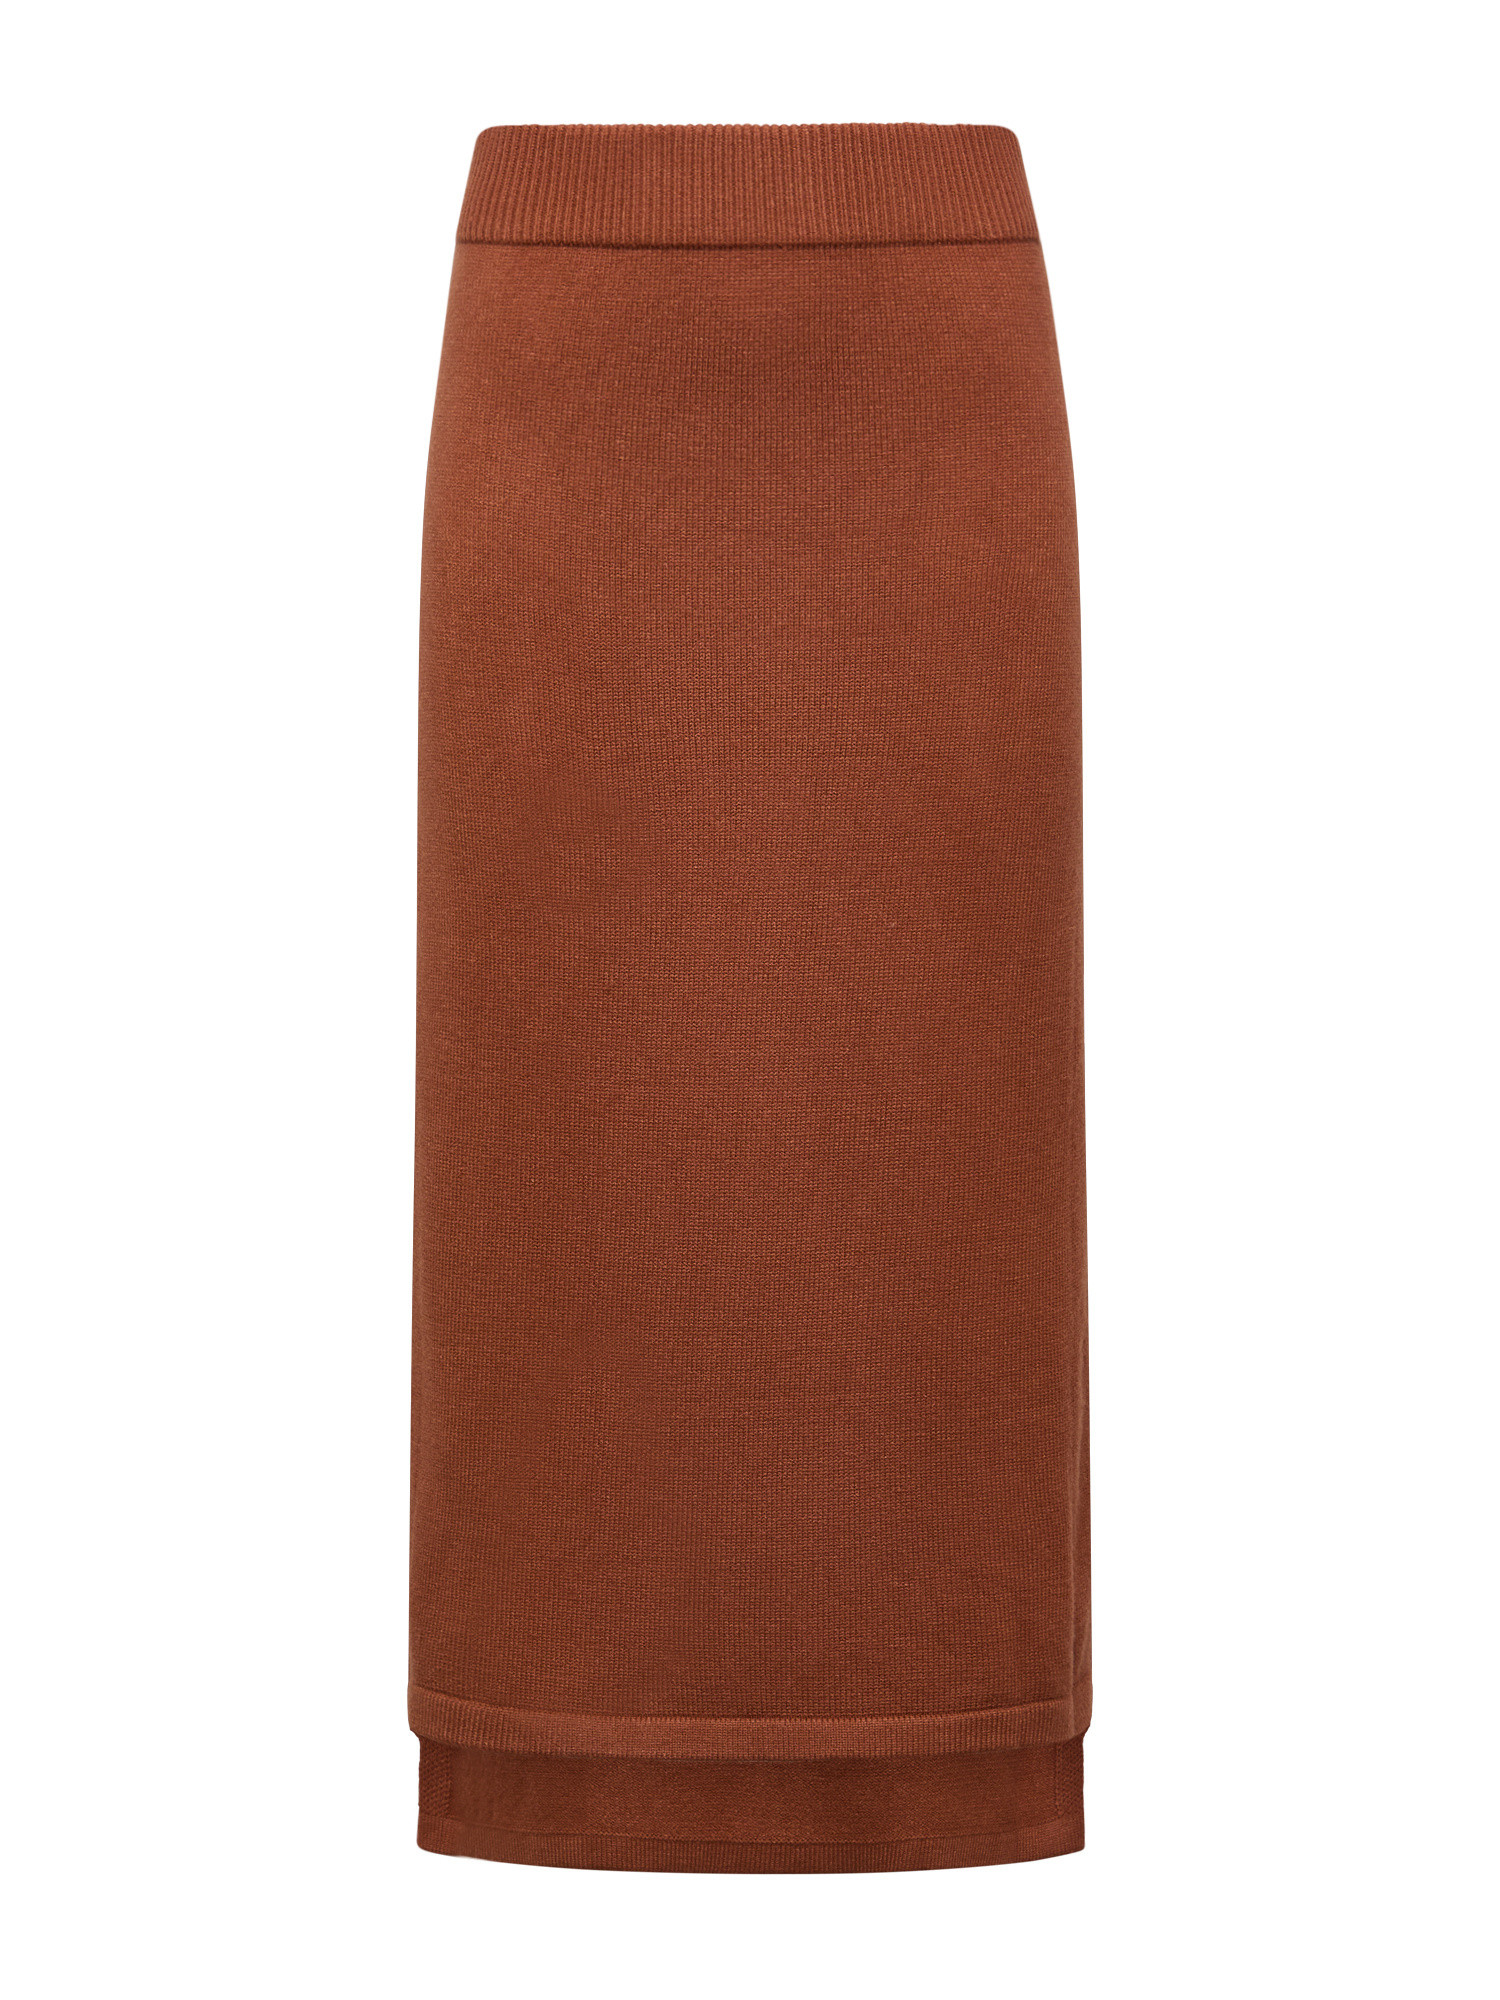 Koan - Knitted midi skirt, Brown, large image number 0